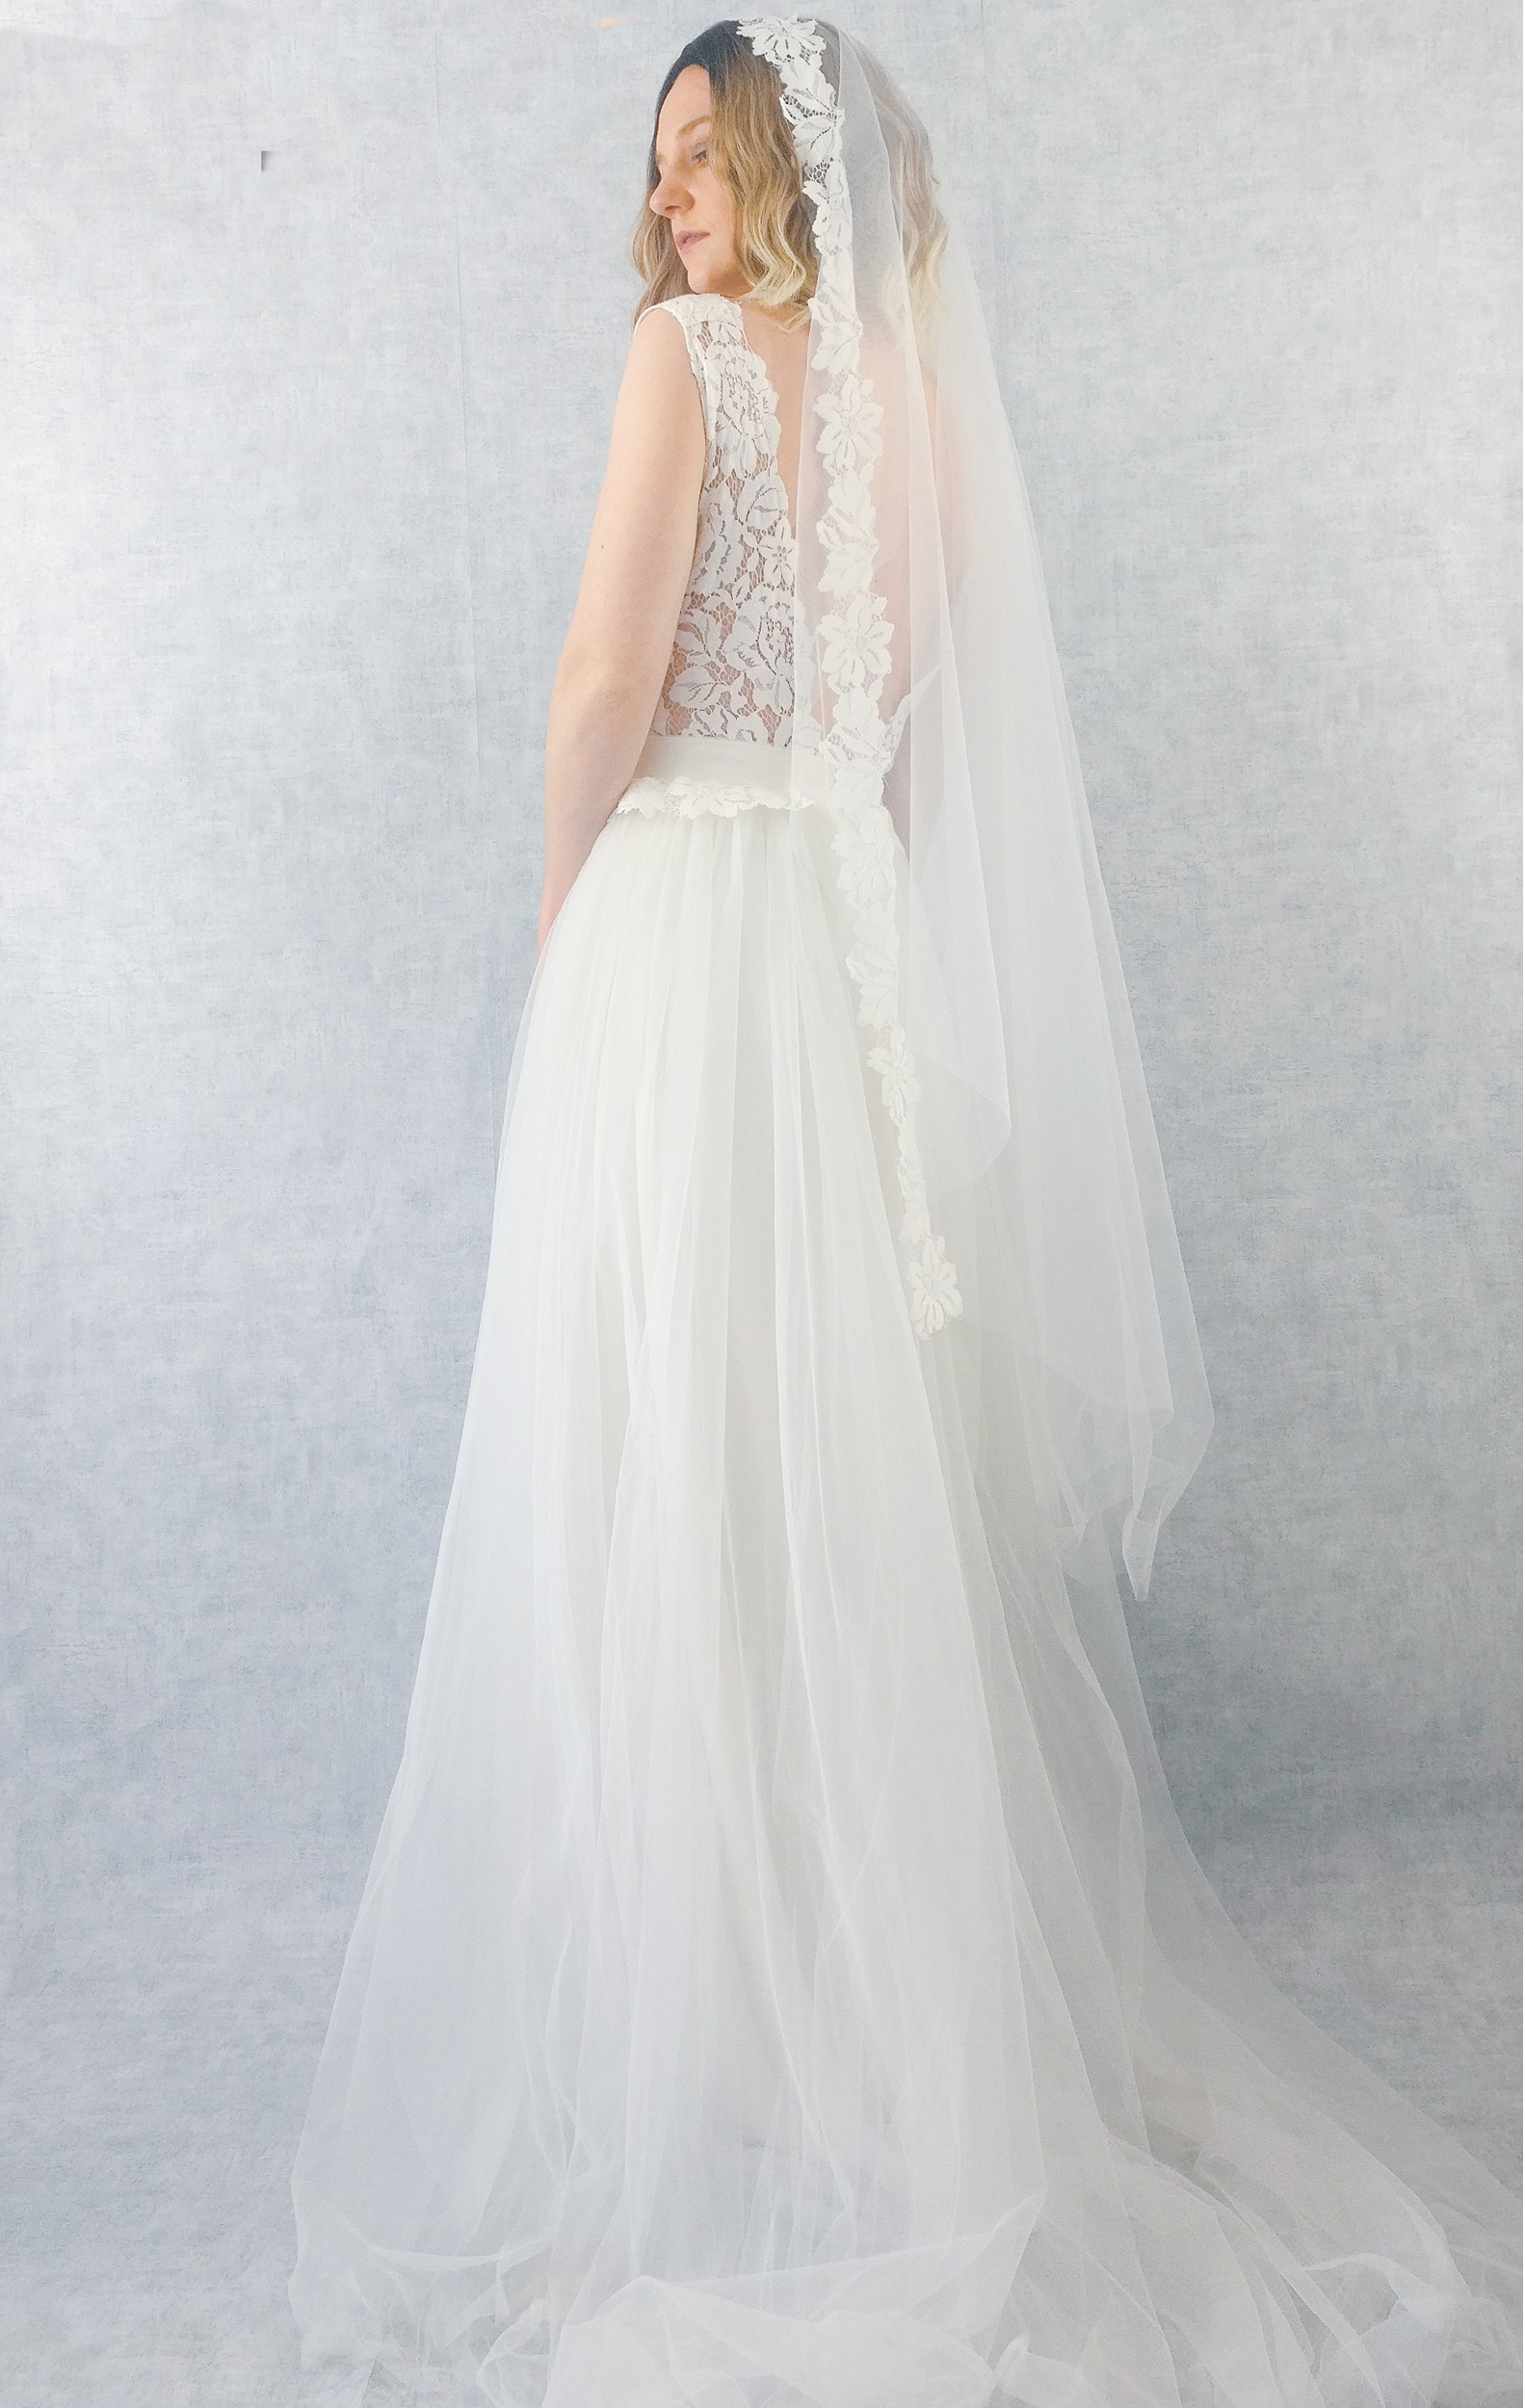 Faith Cauvain: Robes de mariée Collection 2020